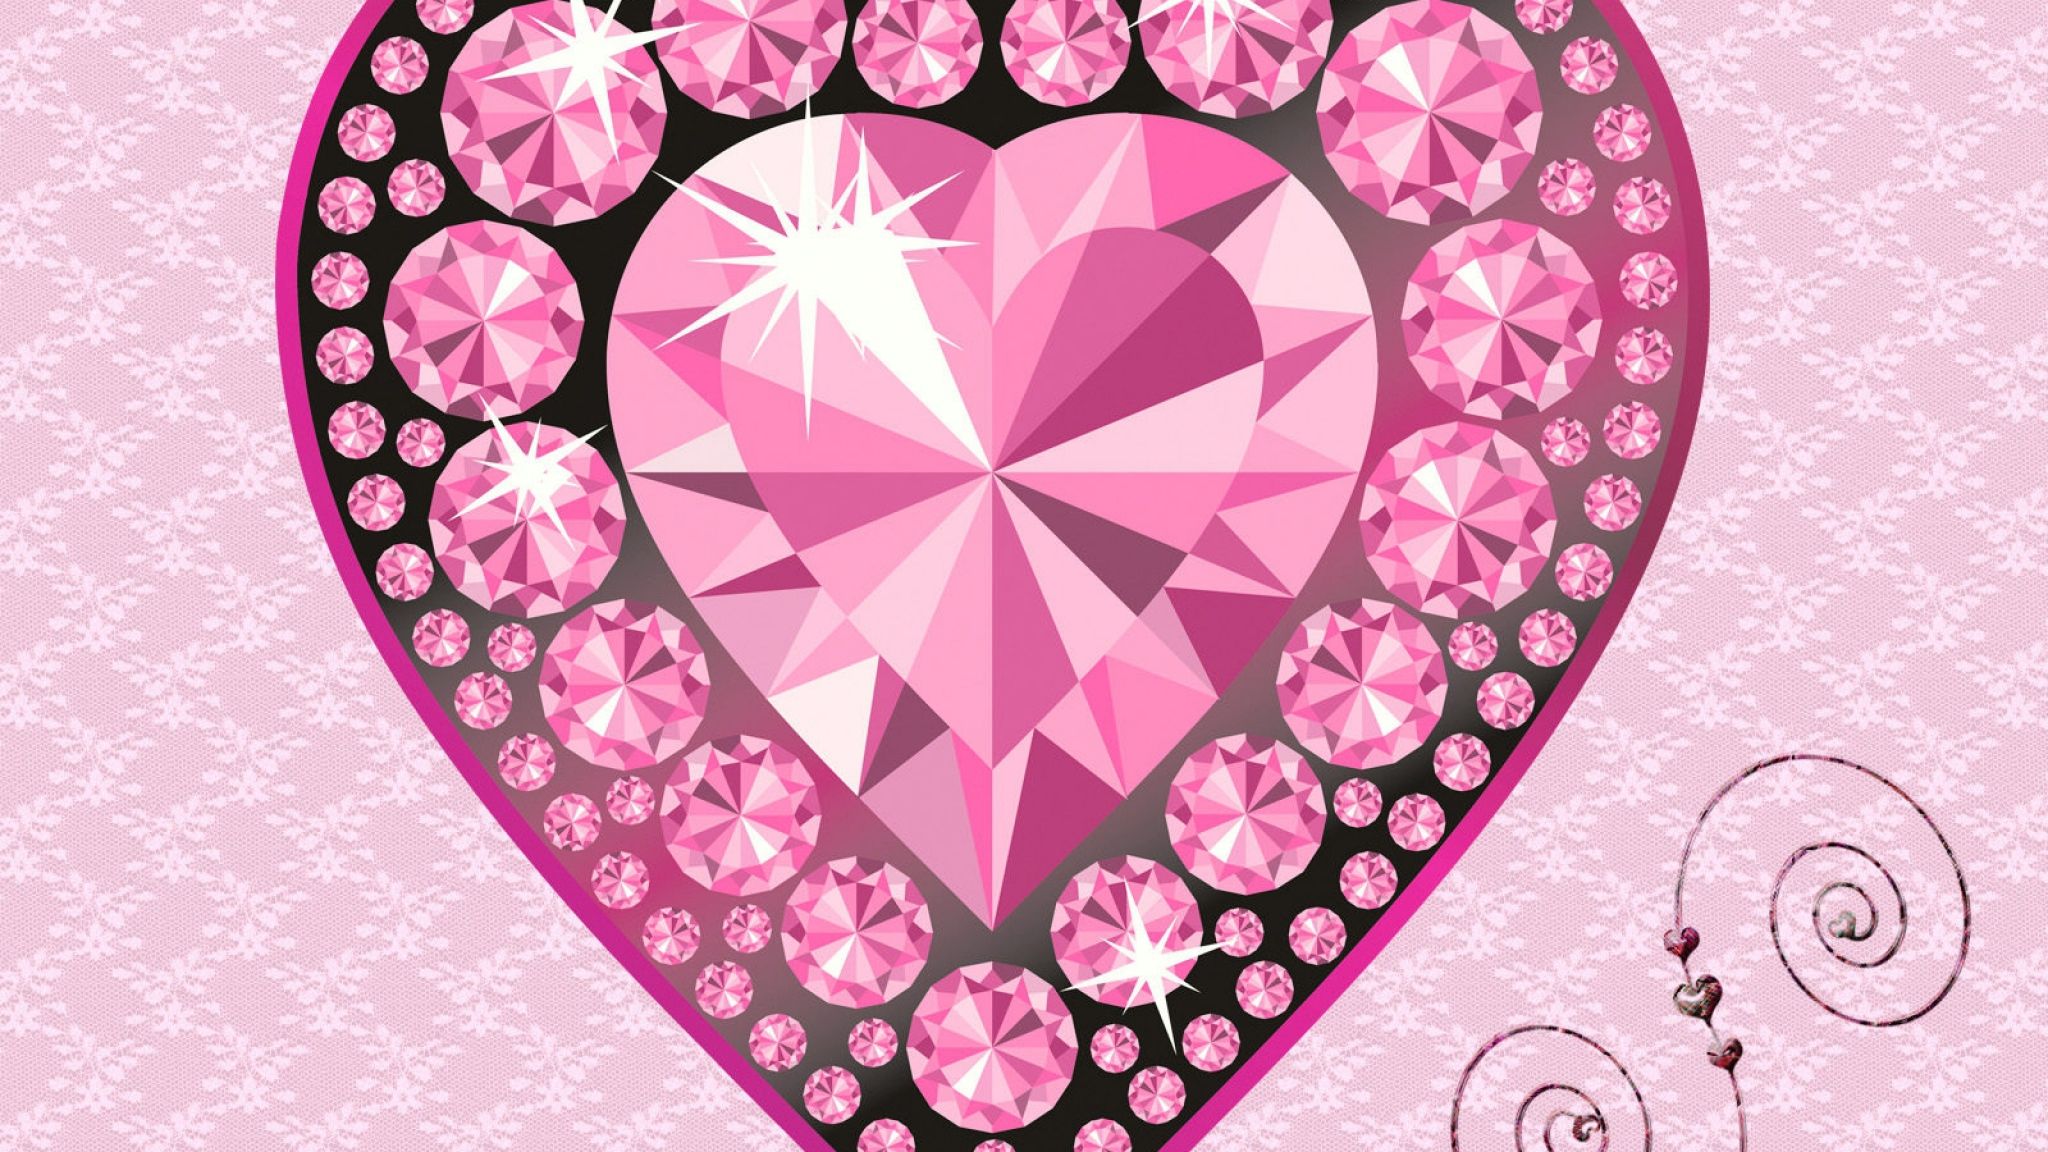 Widescreen-Diamond-Wallpaper-Cool-Image-Pink-Picture.jpg